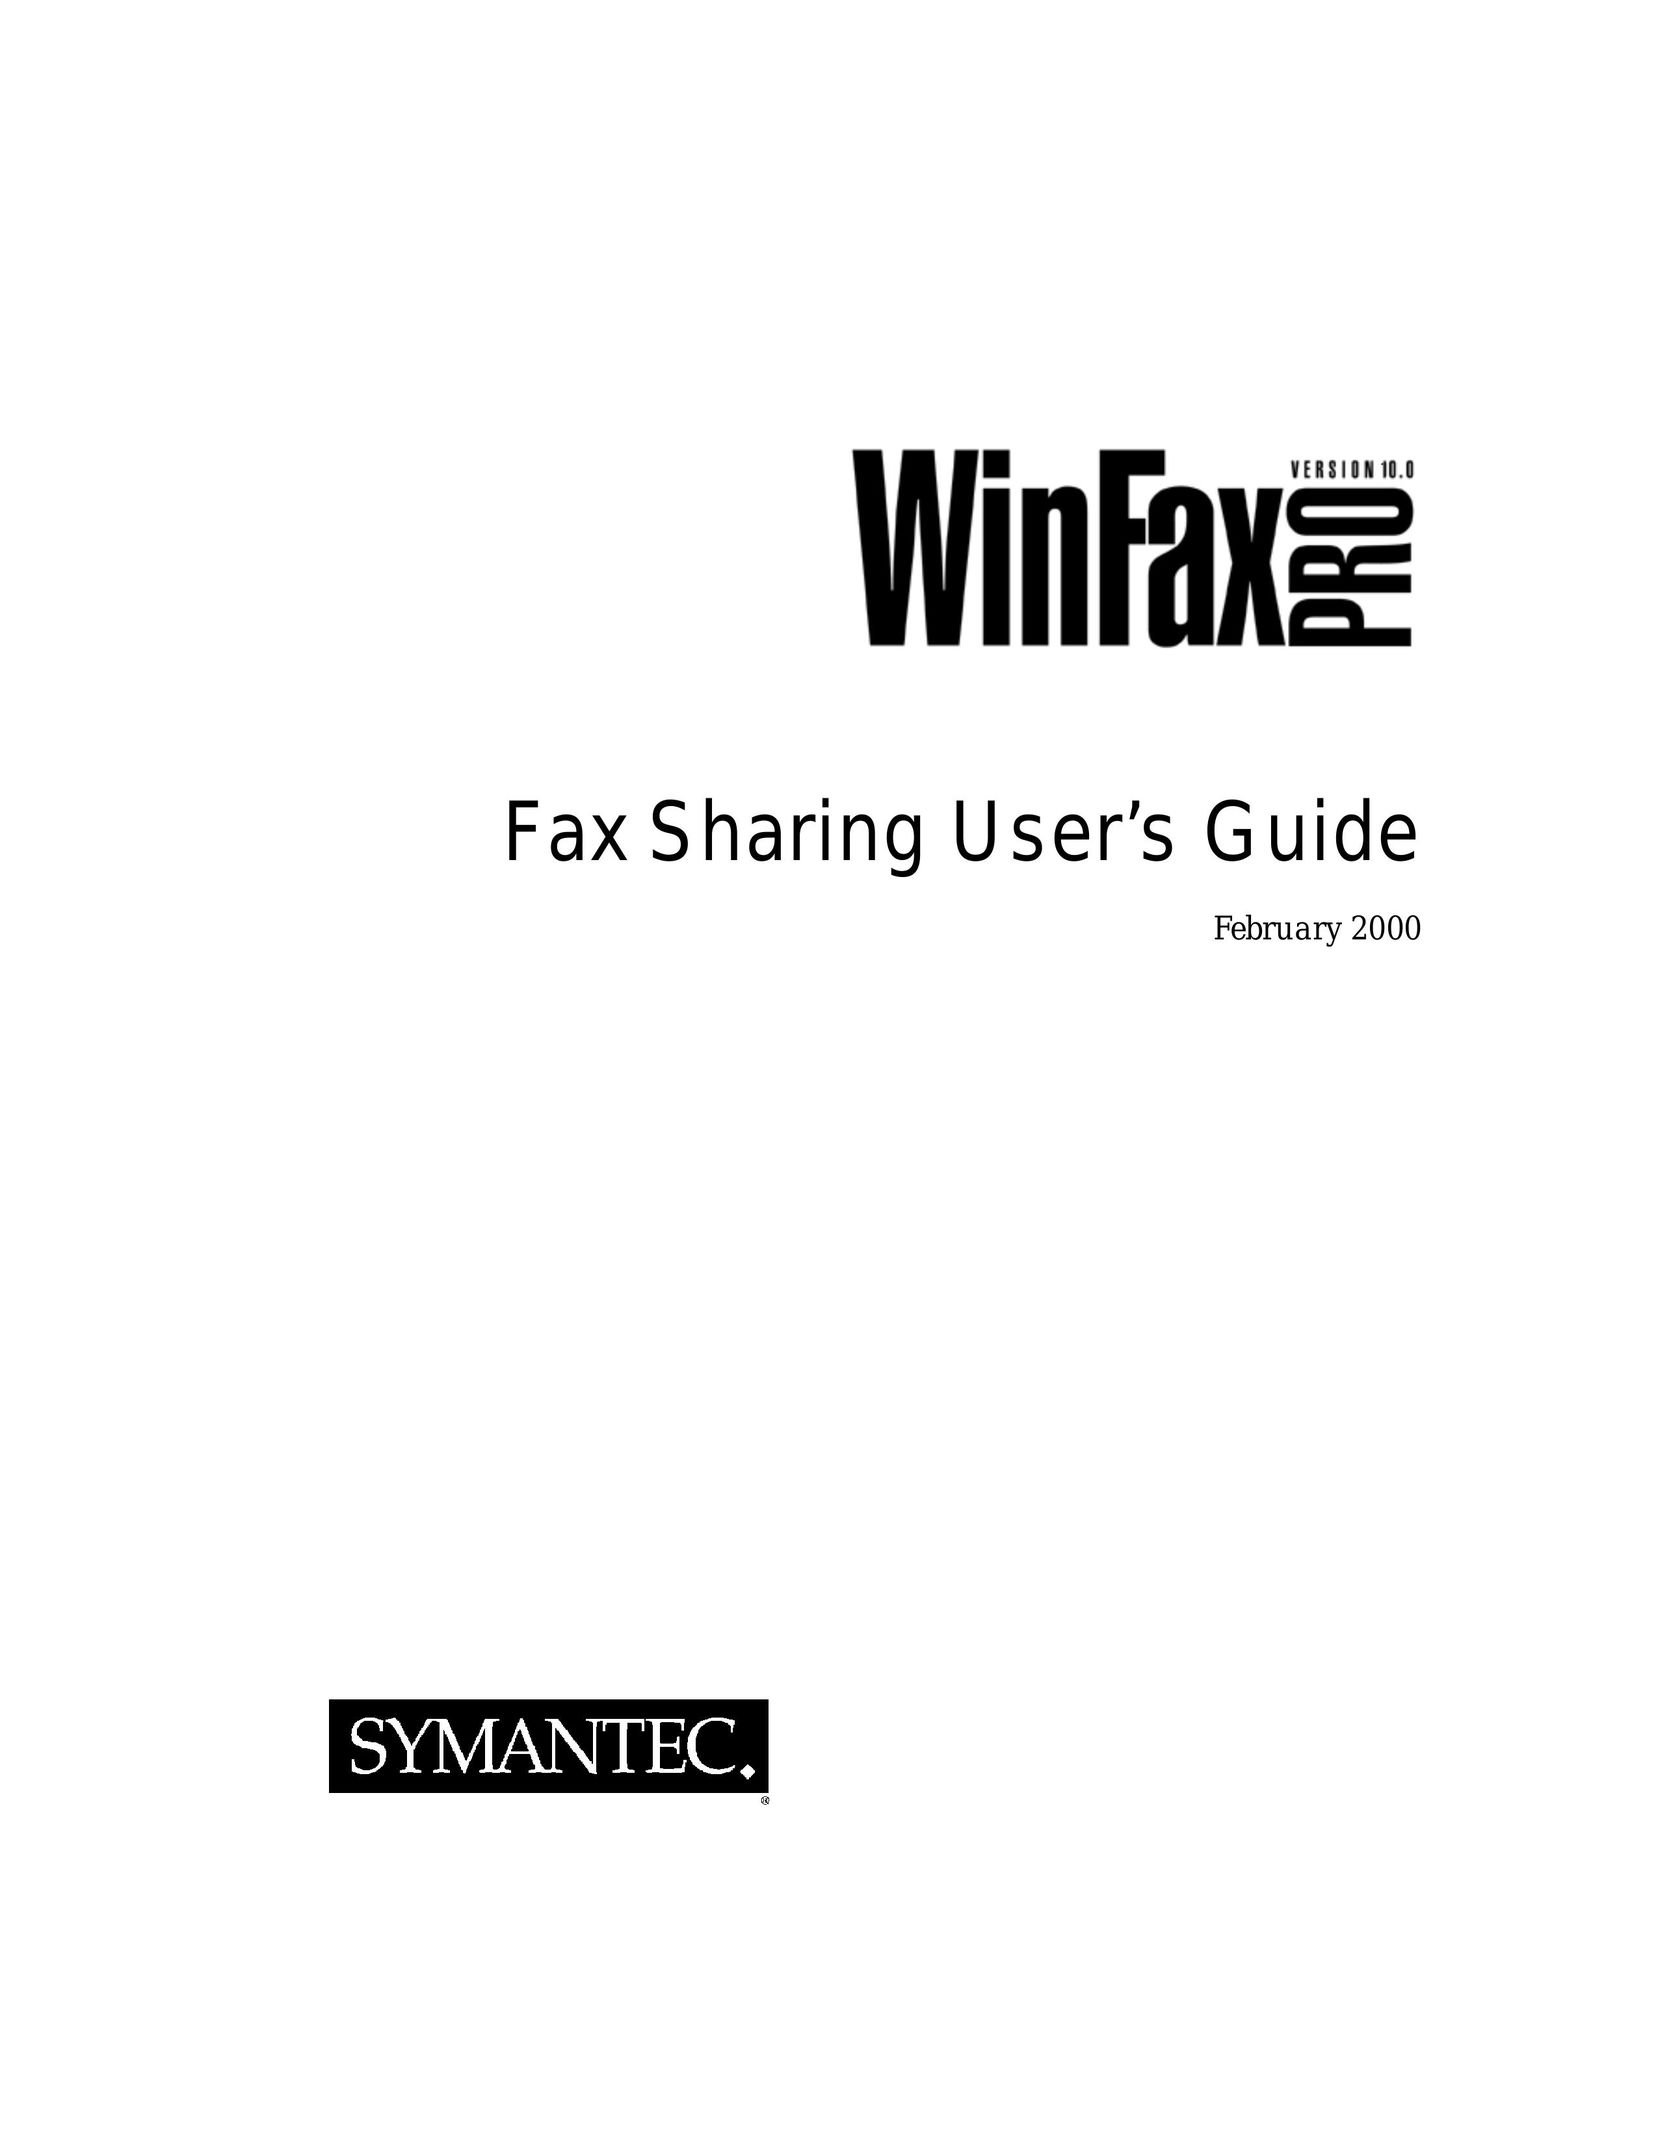 Xerox Fax Sharing Fax Machine User Manual